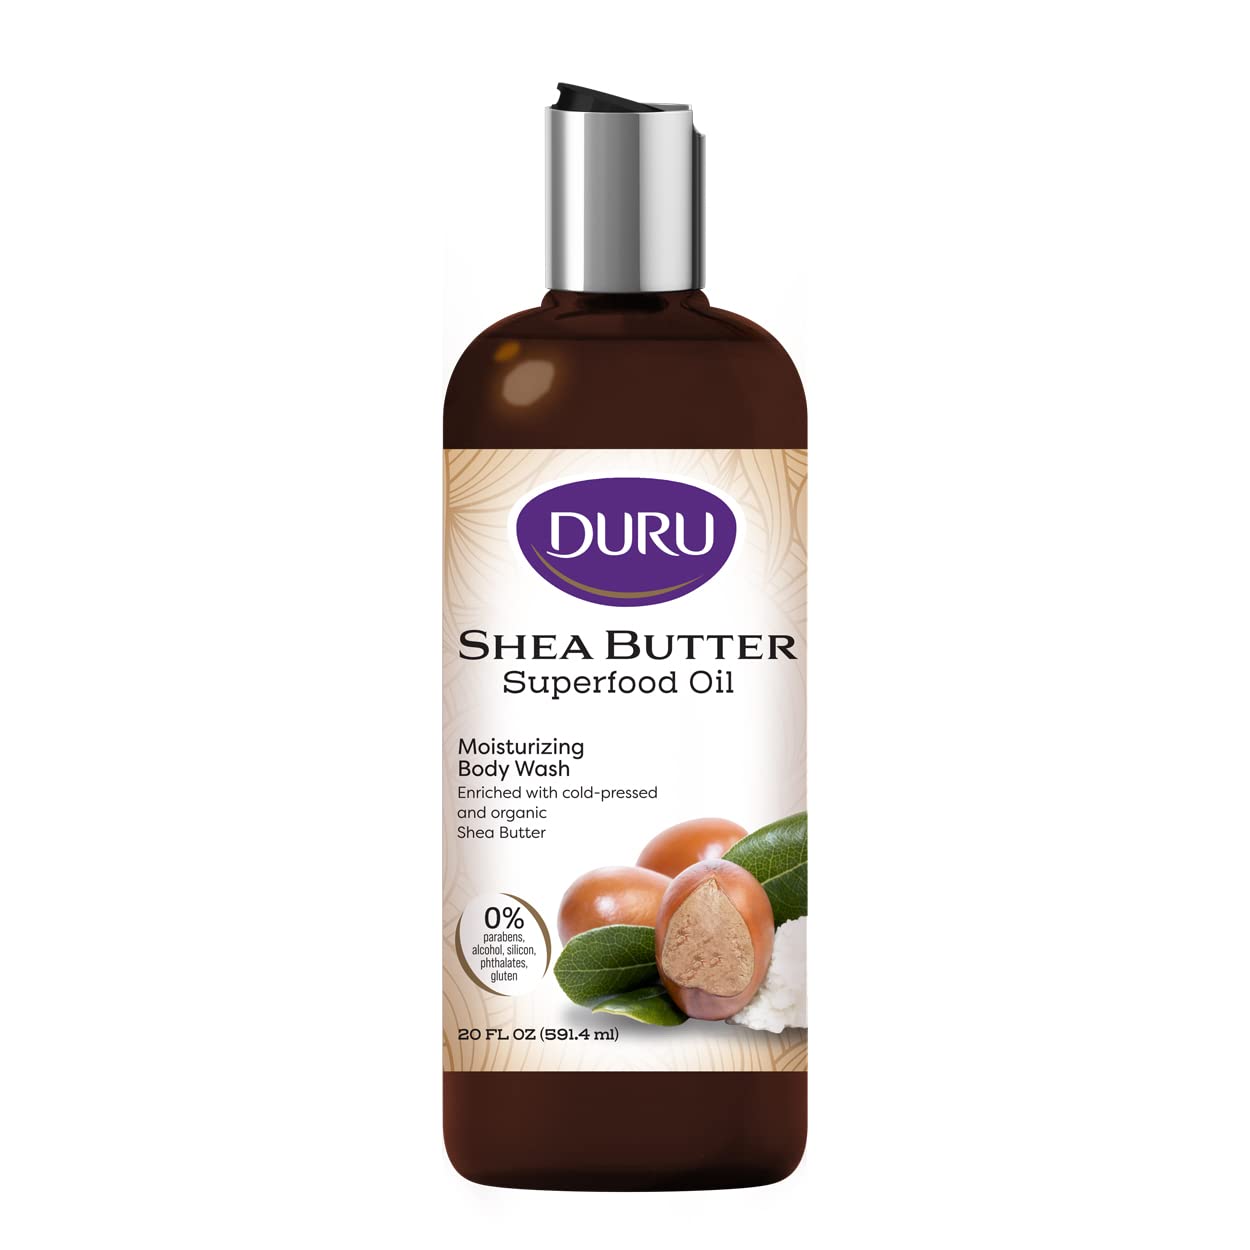 Duru Shea Butter Body Wash - Cleansing Moisturizing Sensitive Skin Shower Gel Paraben Free Alcohol Free Silicone Free Phthalete Free Gluten Free Body Wash